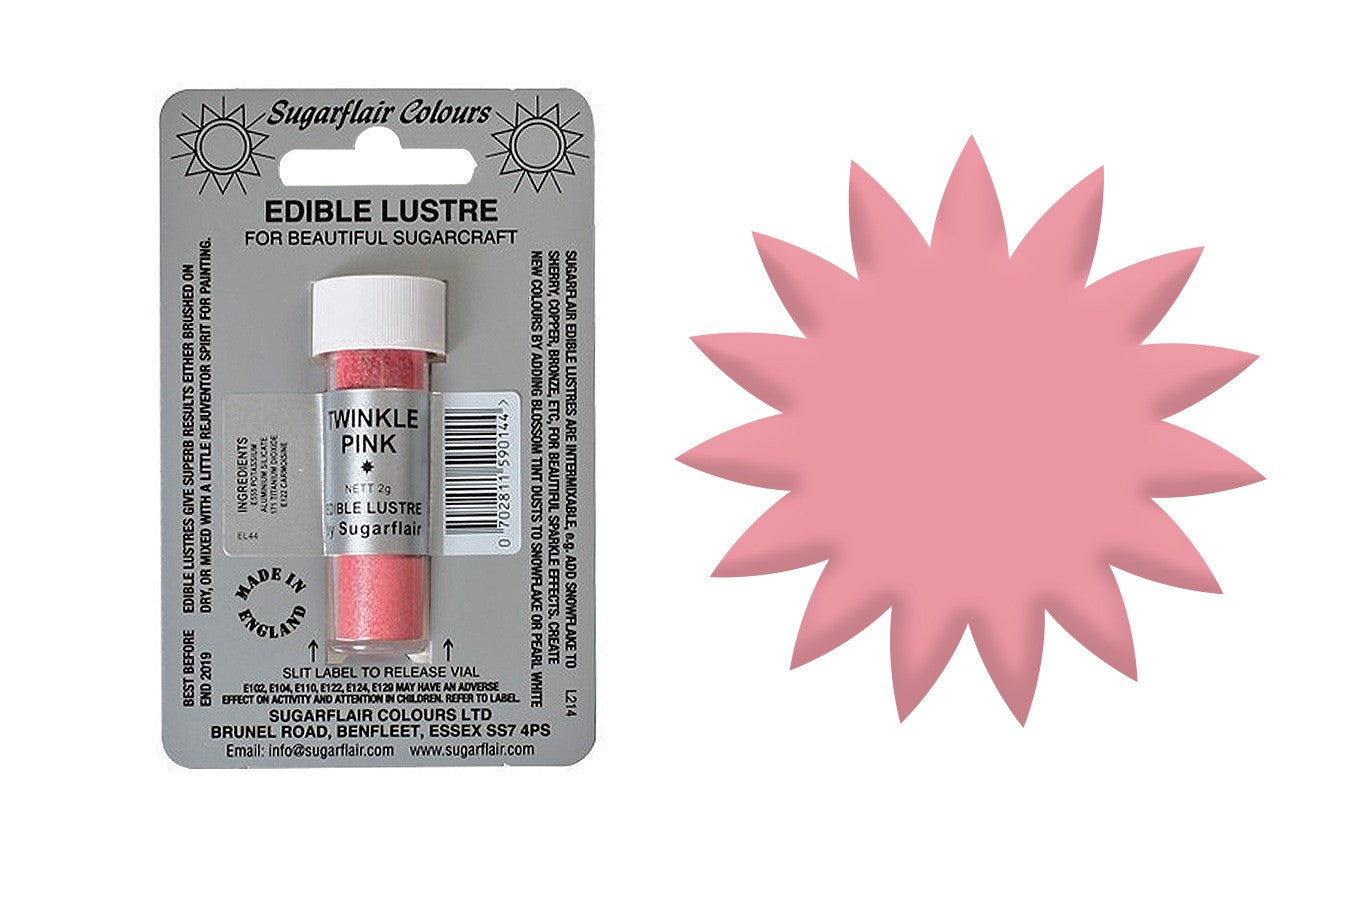 Sugarflair Edible Lustre Dust Twinkle pink - The Cooks Cupboard Ltd